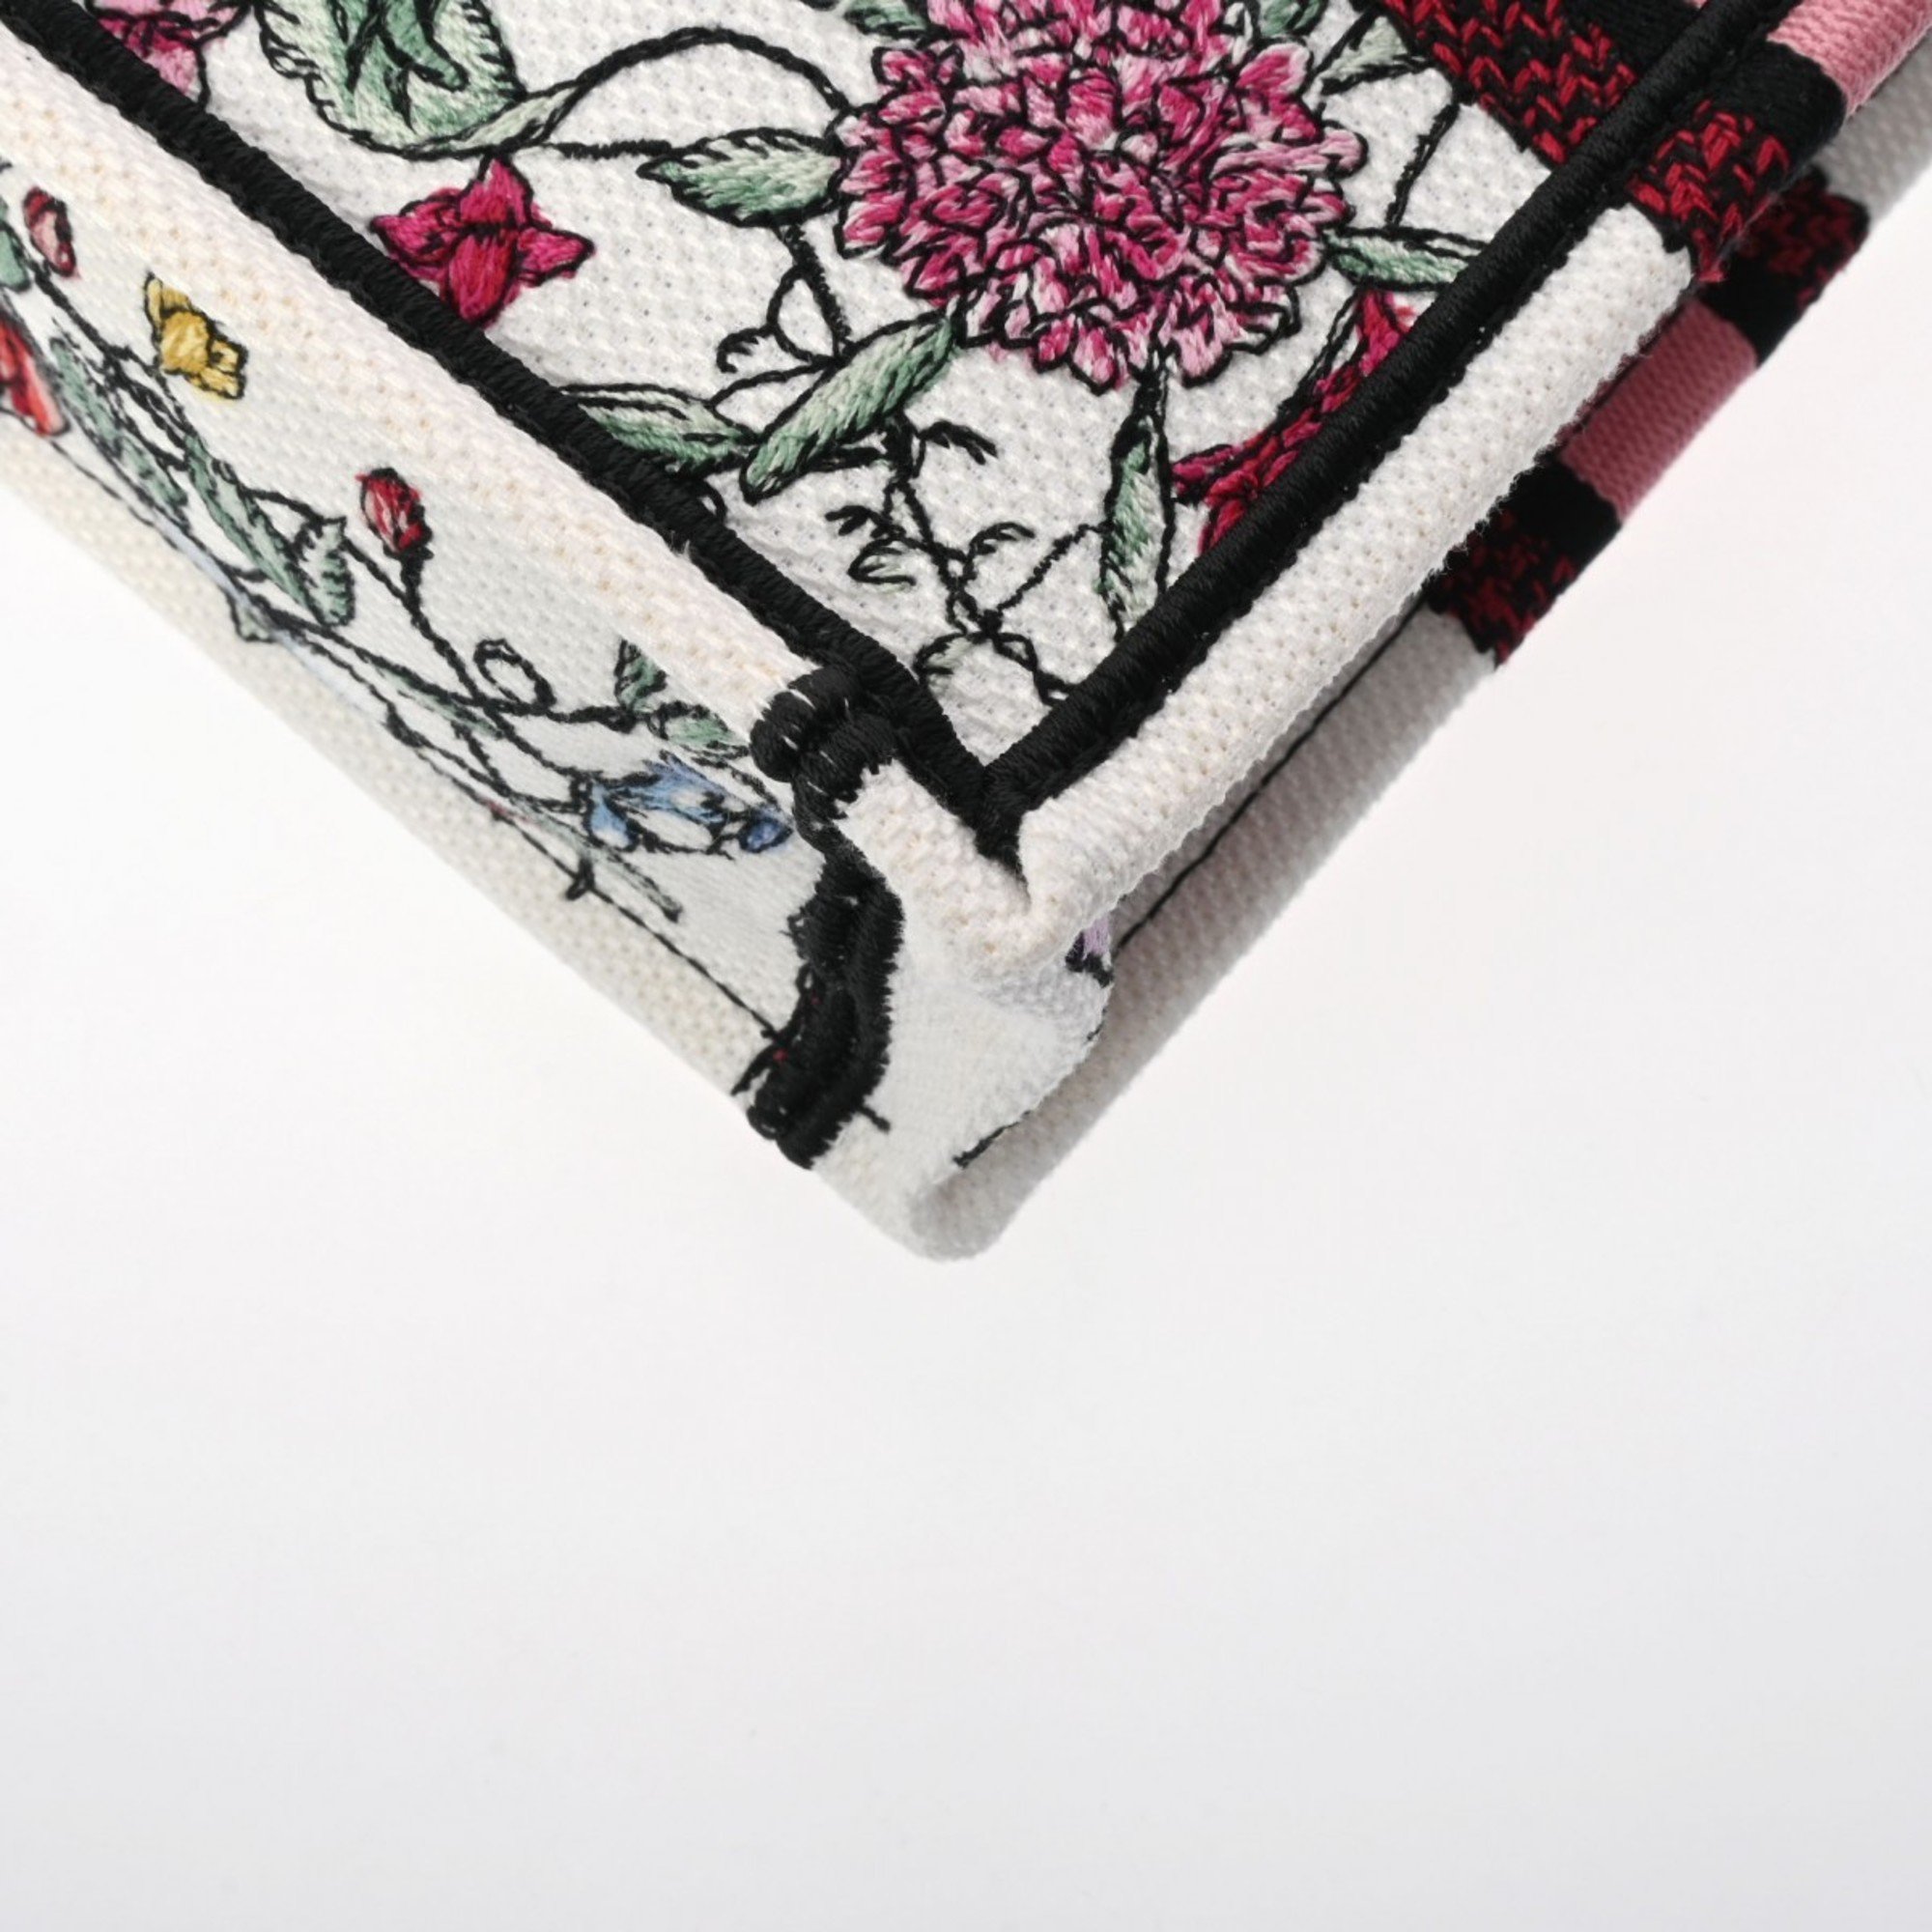 CHRISTIAN DIOR Christian Dior Book Tote Phone Bag White Multi S5555JEMFM933 Women's Jacquard Handbag